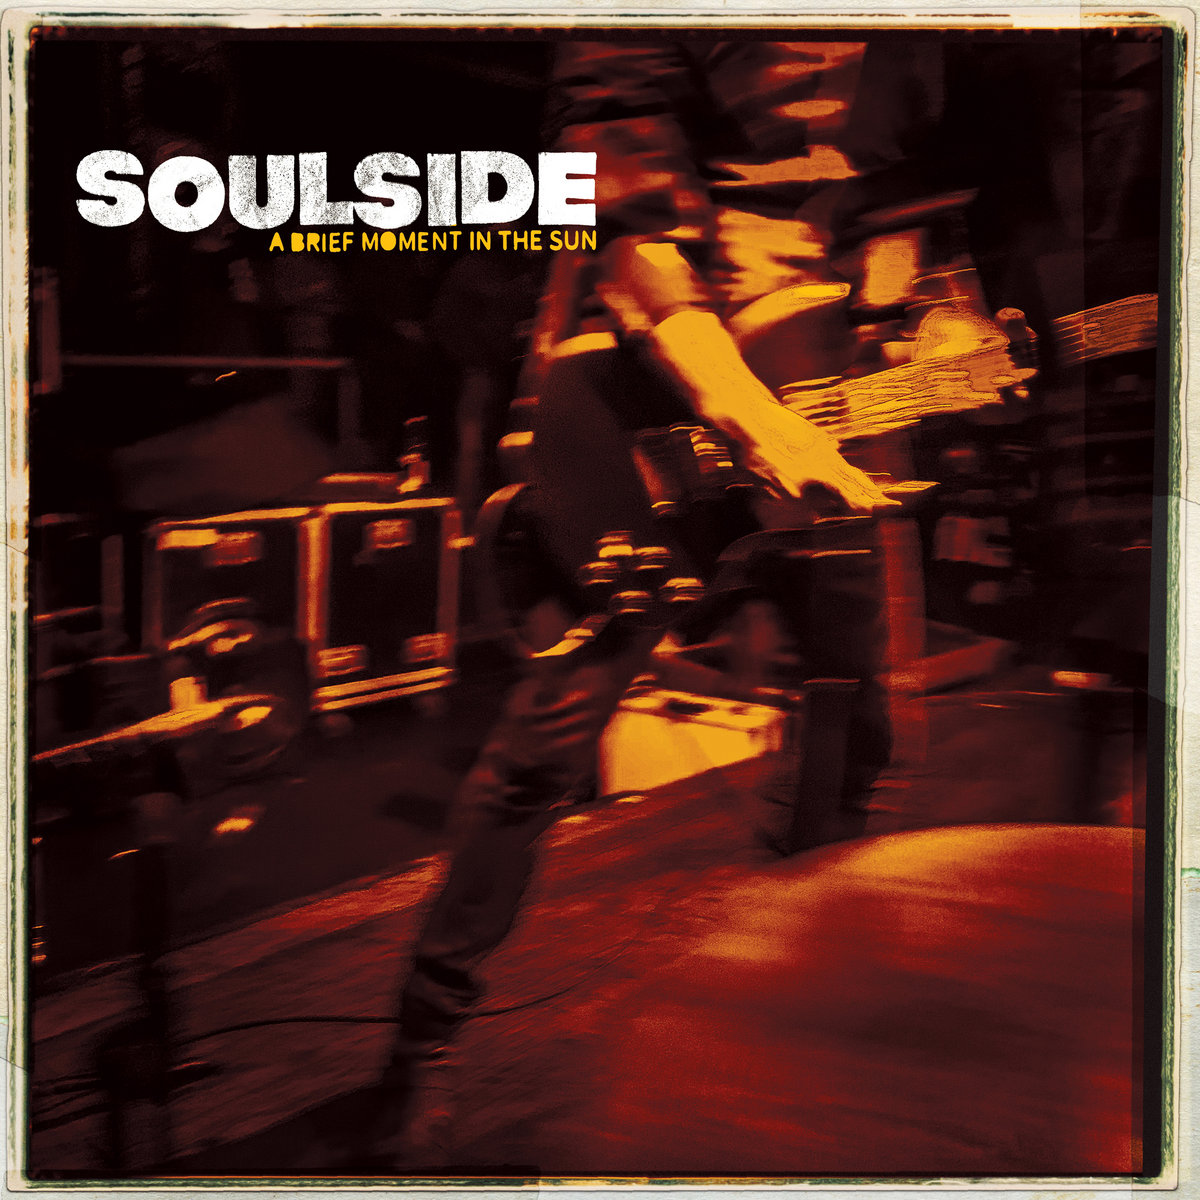 Soulside – “Runner” & “Reconstruction”